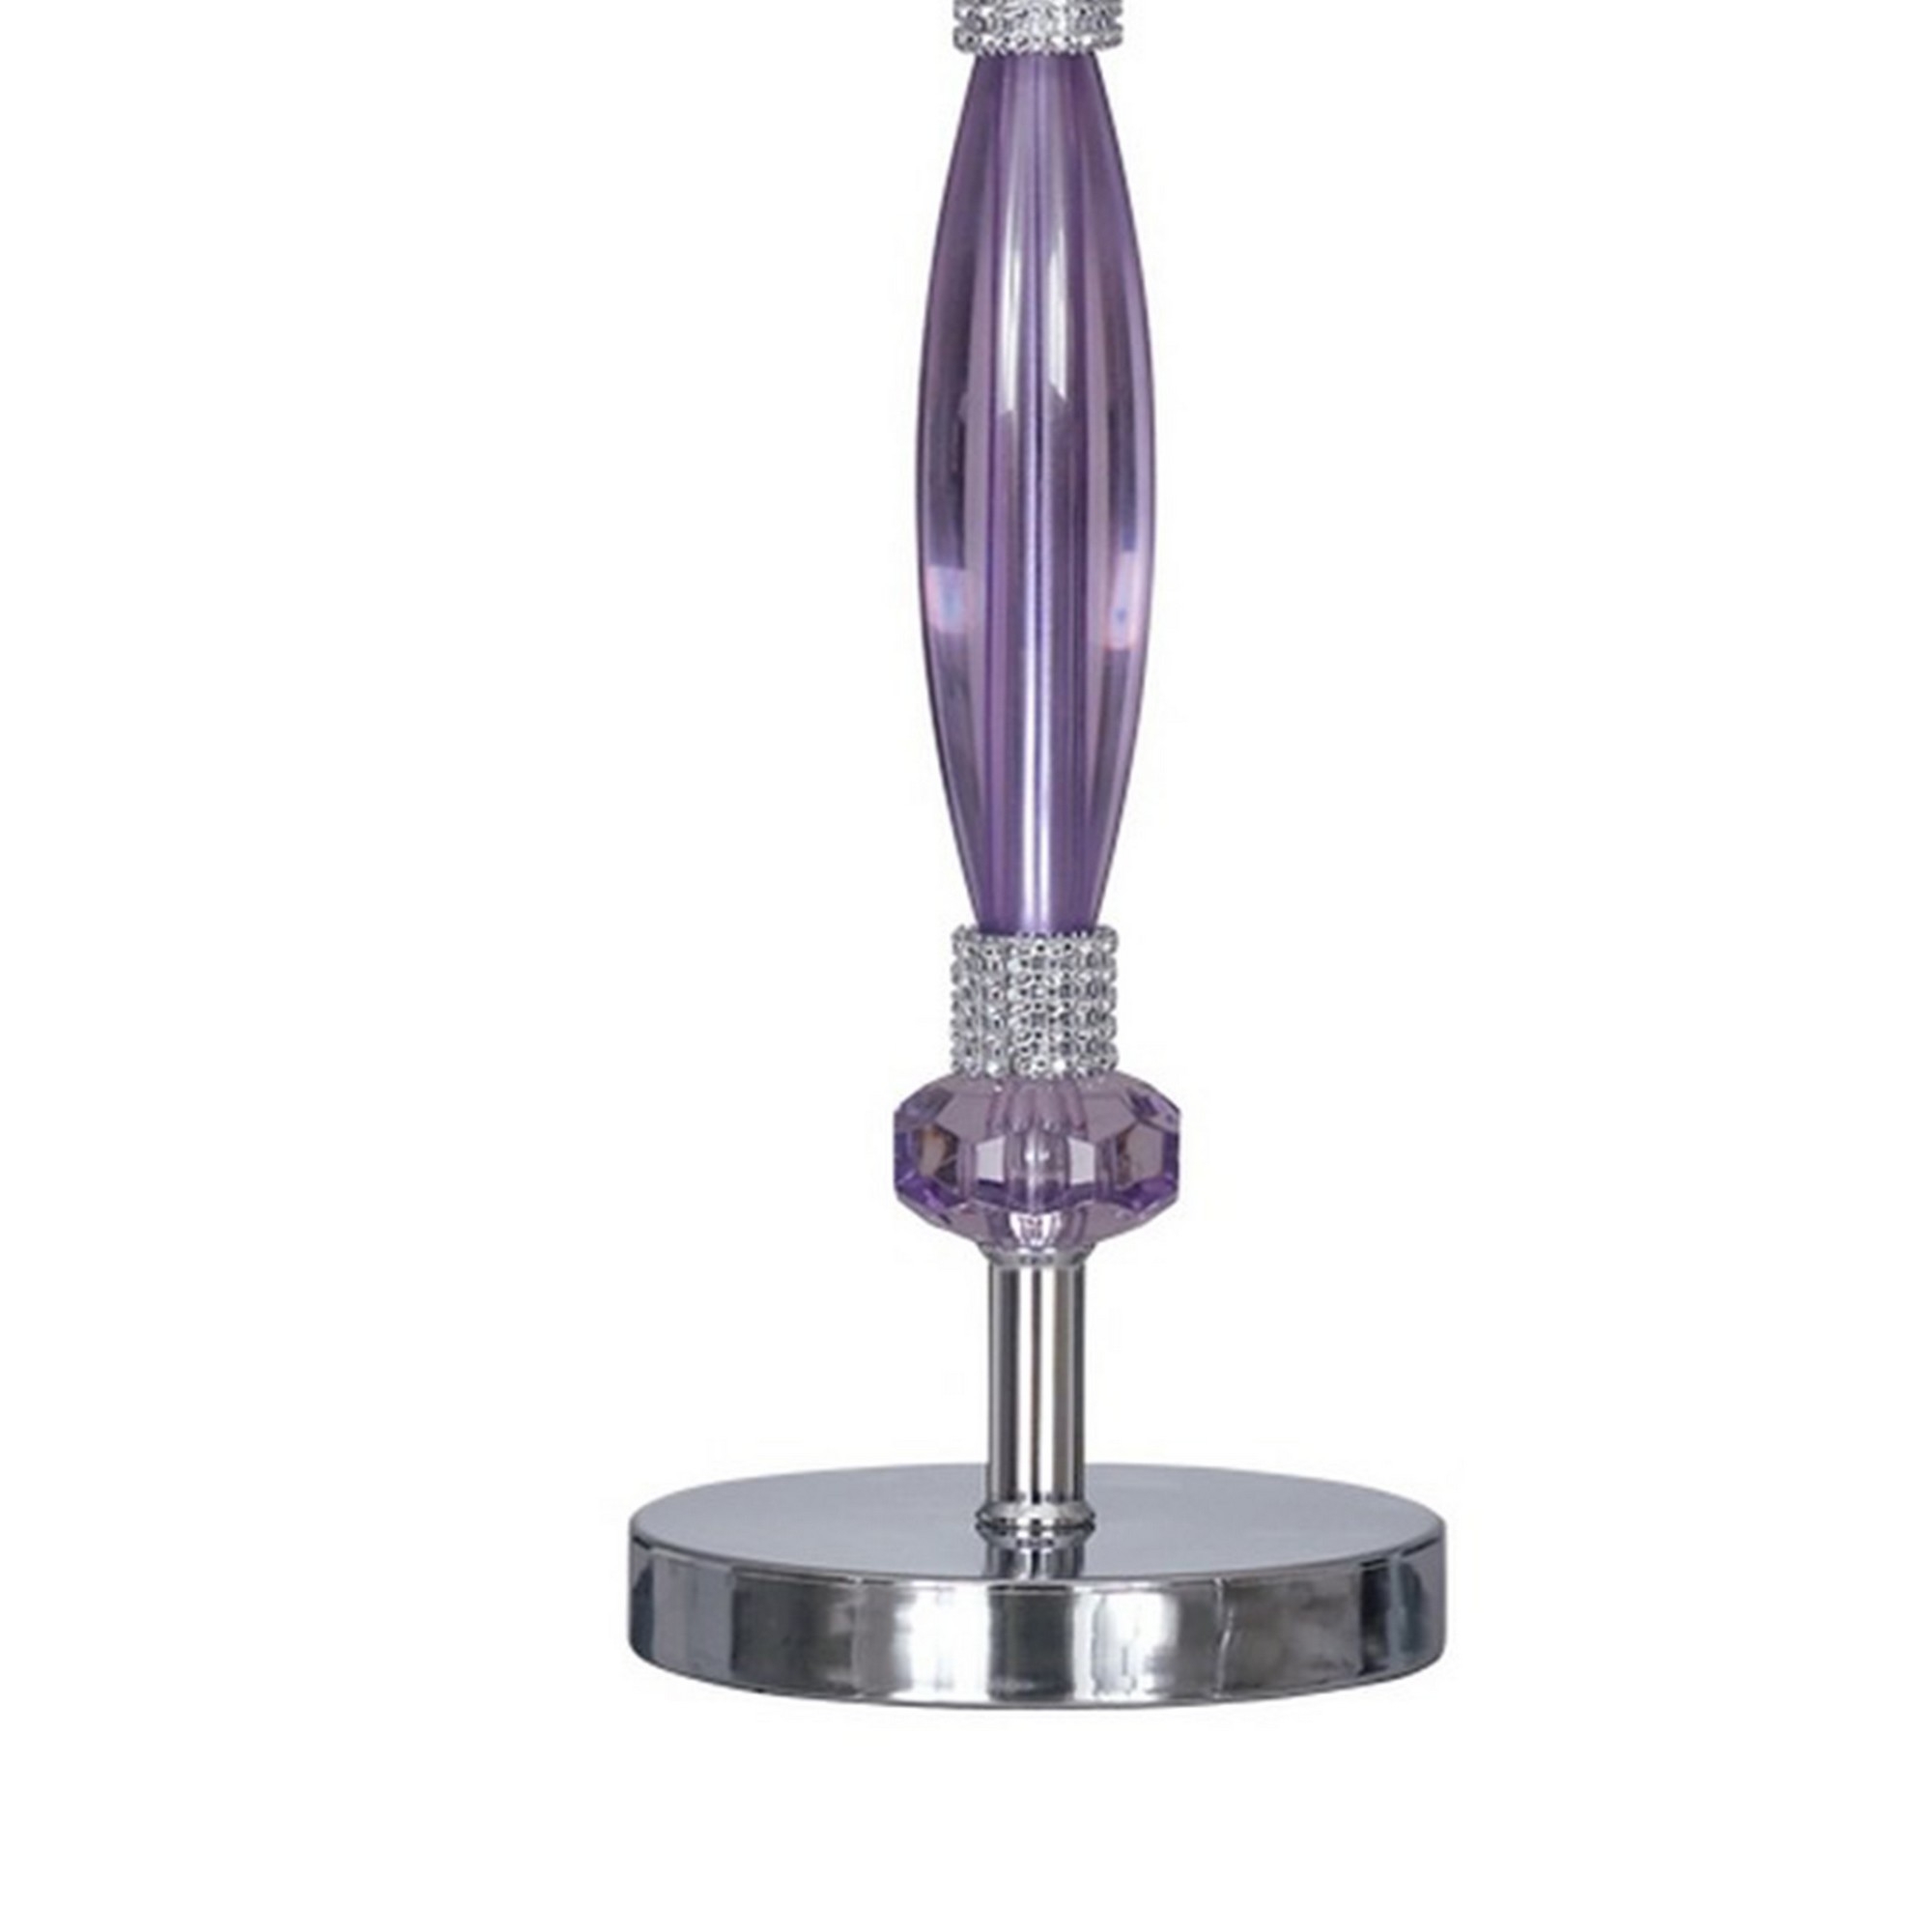 Acrylic And Metal Base Table Lamp With Fabric Shade, Purple- Saltoro Sherpi